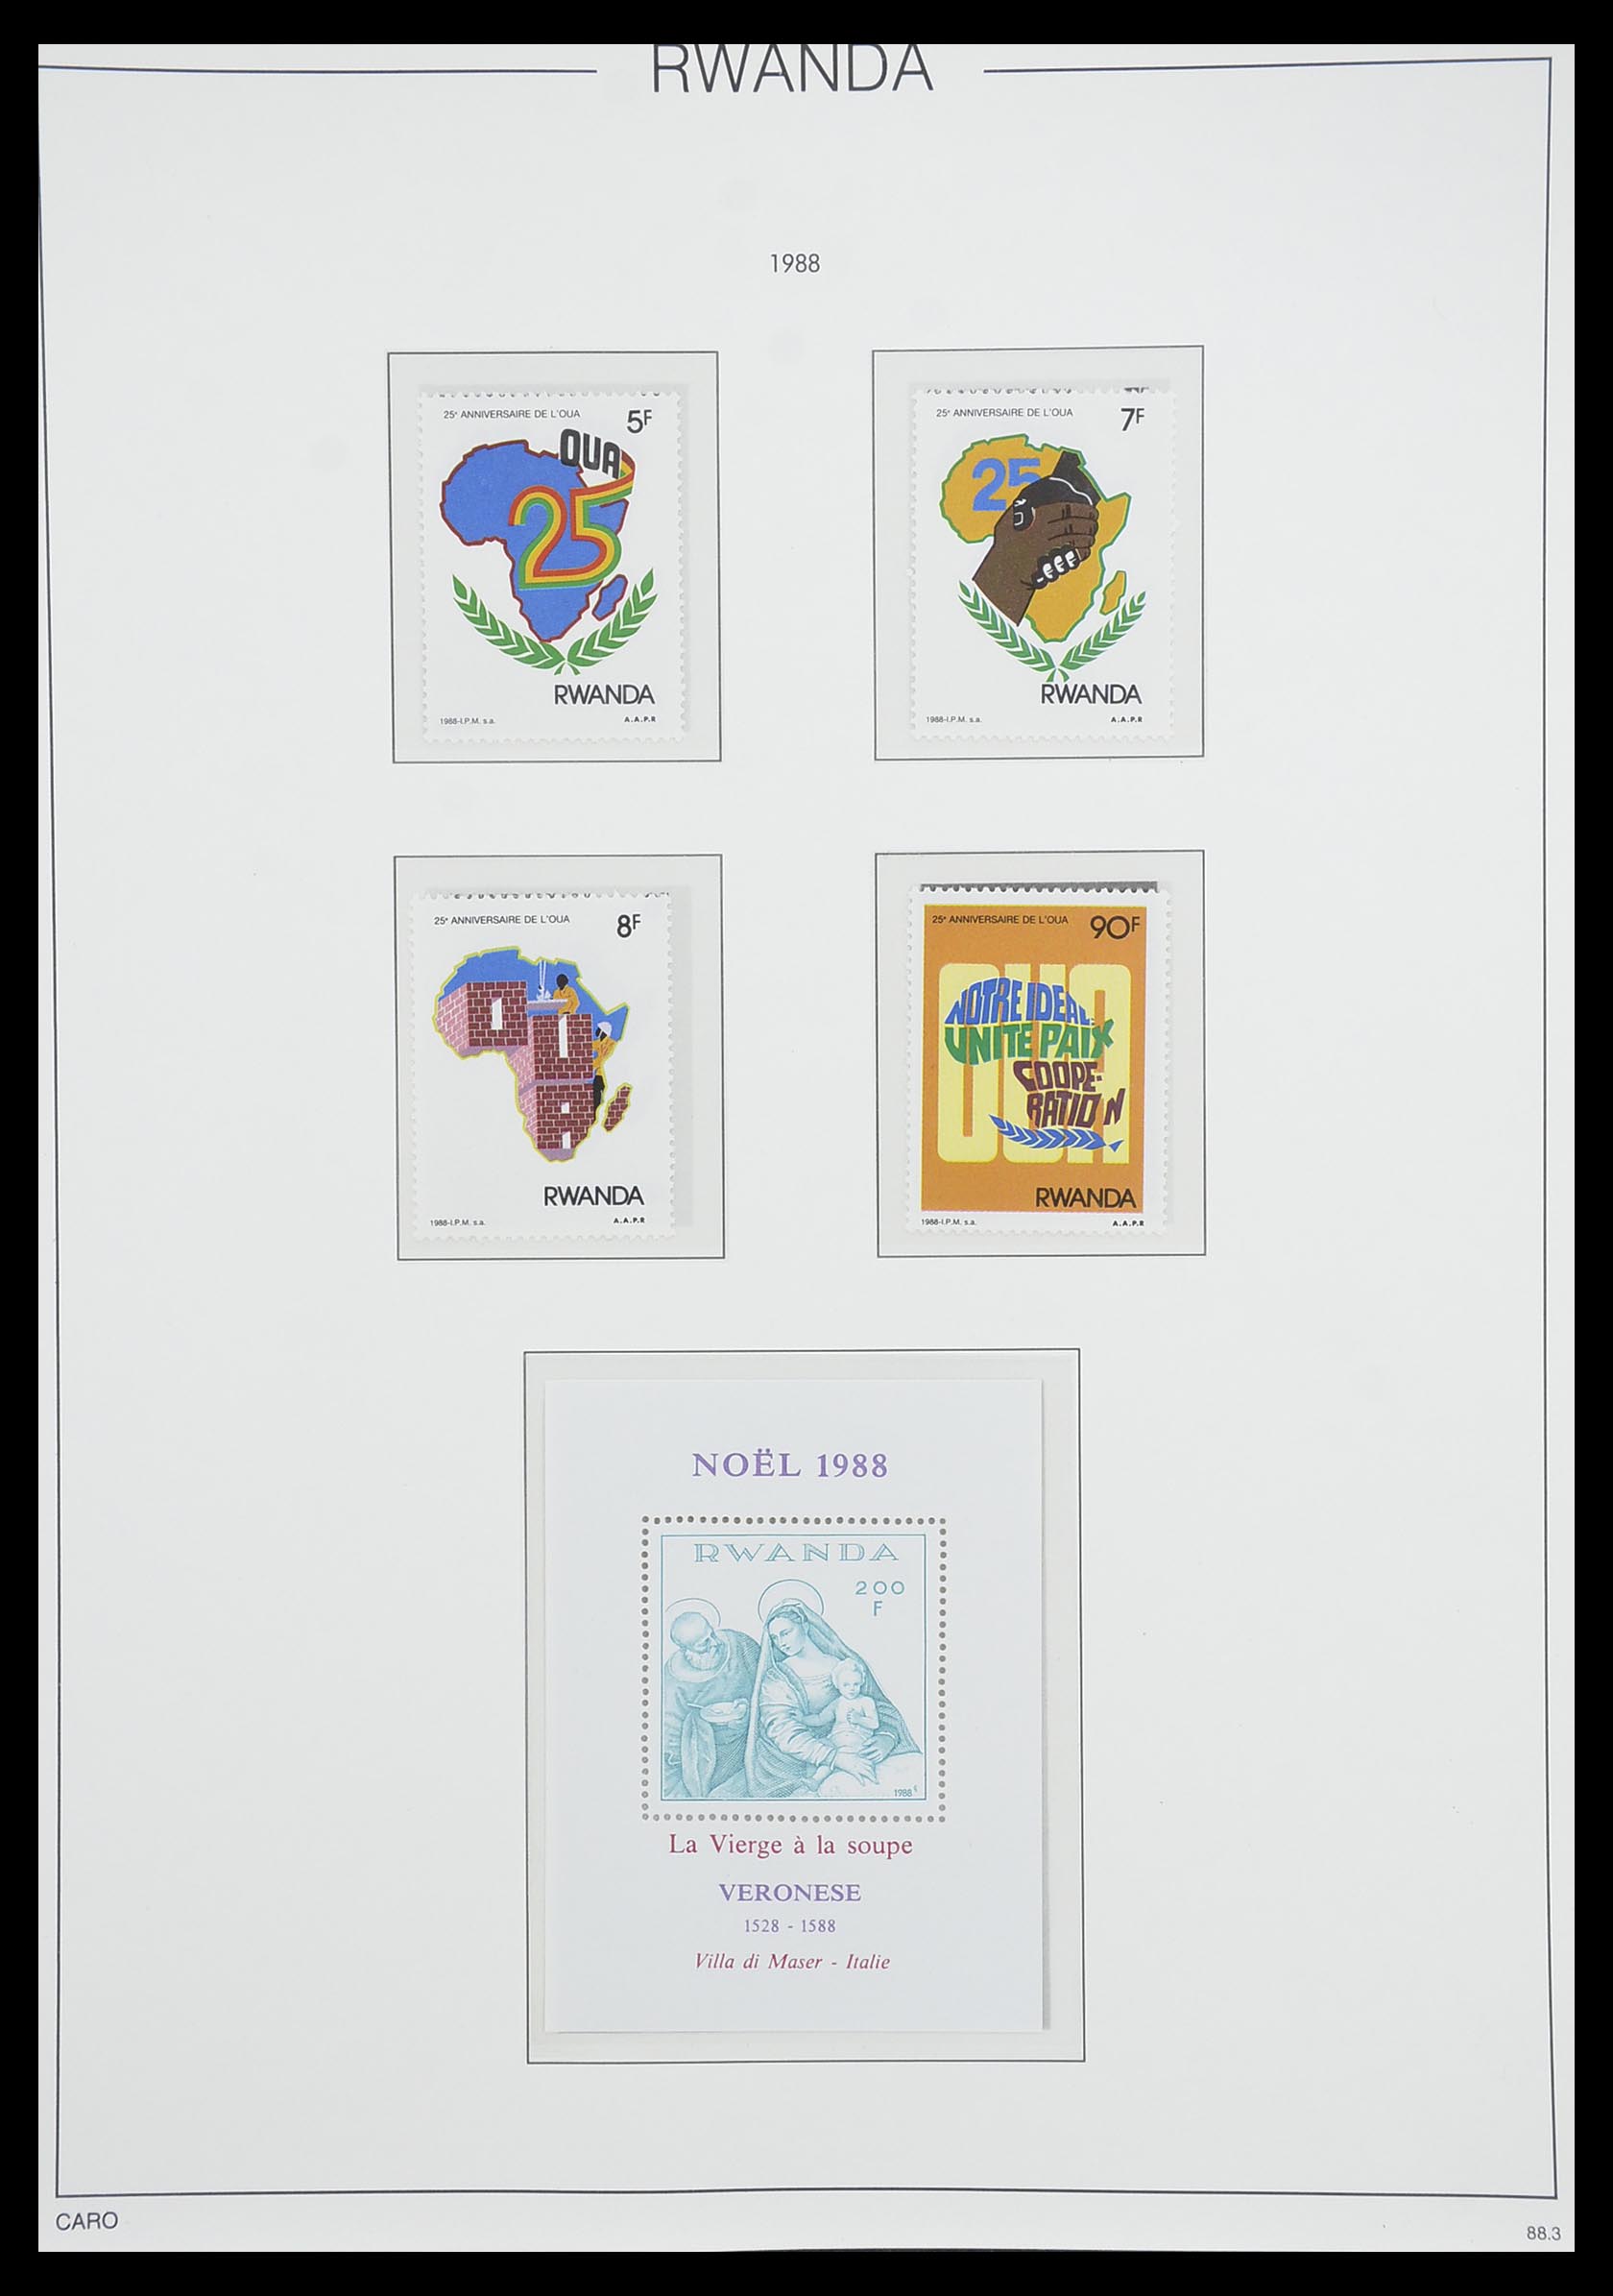 33767 183 - Stamp collection 33767 Rwanda 1962-1988.